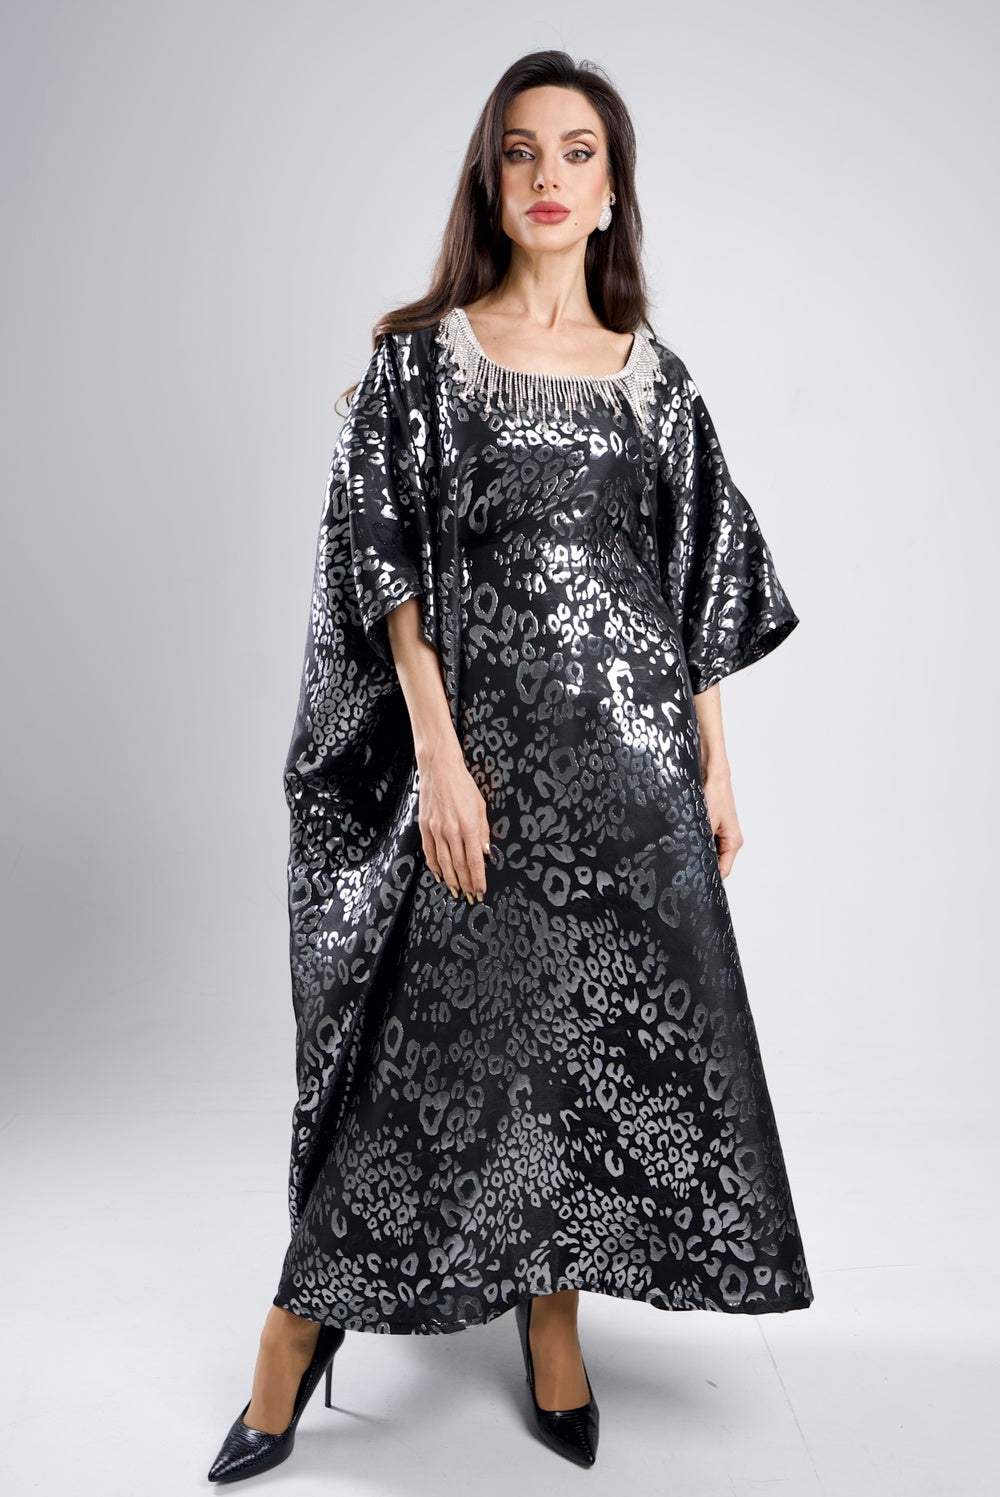 Crystal-Adorned Cheetah Dress